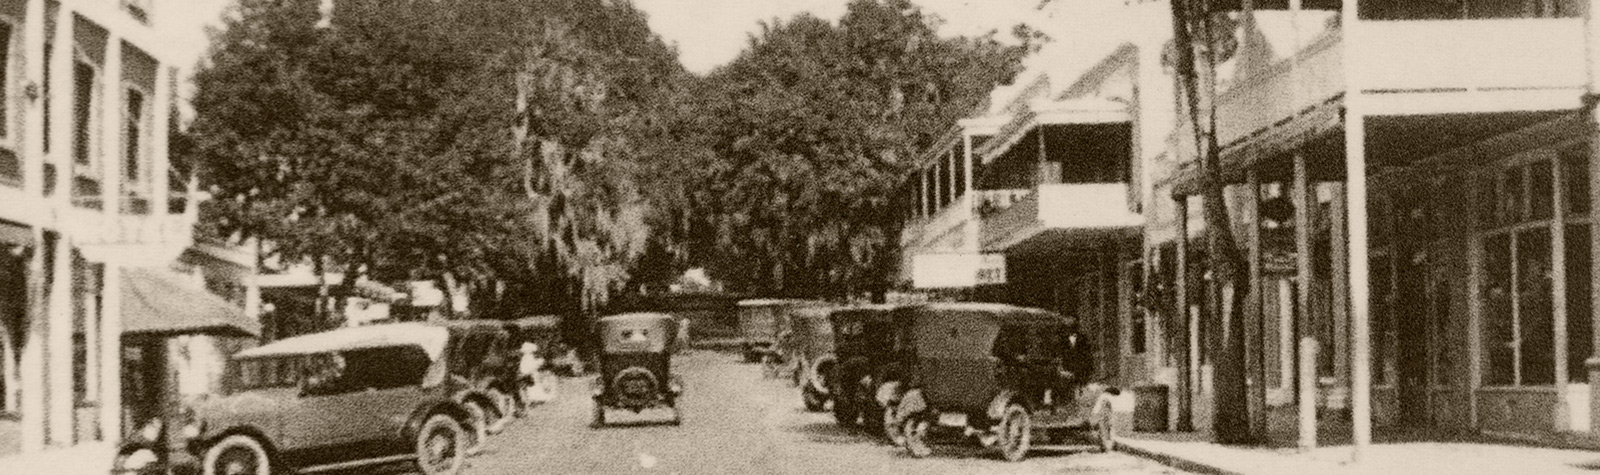 vintage photo of main street Mount Dora